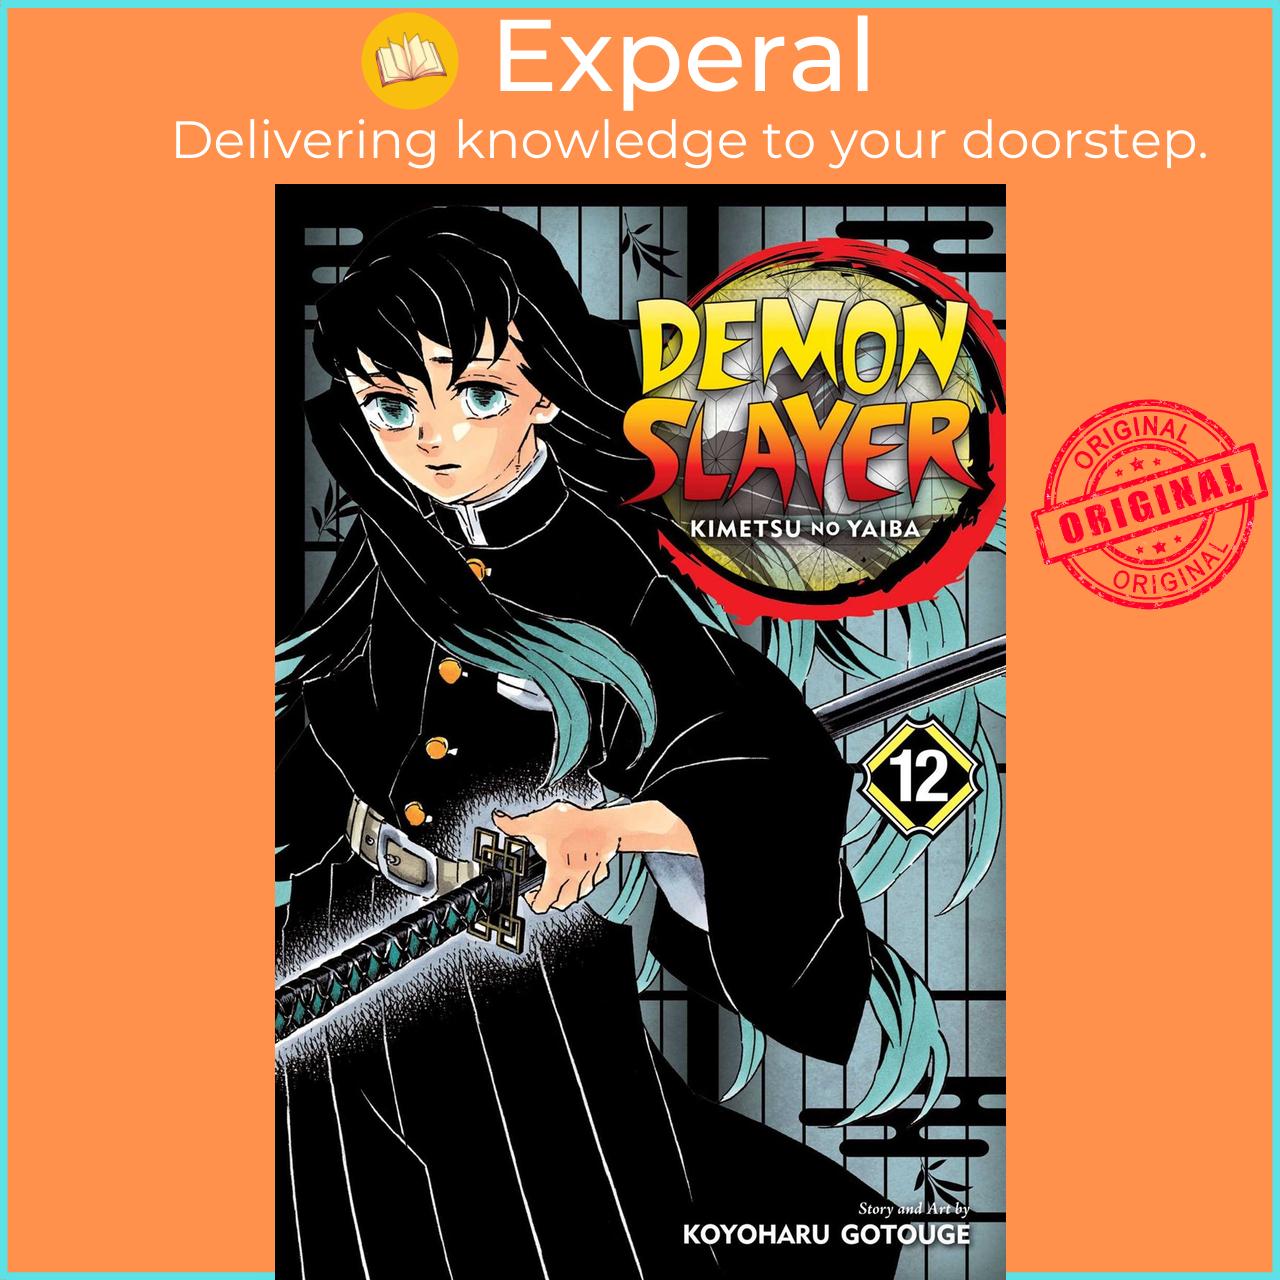 Sách - Demon Slayer: Kimetsu no Yaiba, Vol. 12 by Koyoharu Gotouge (US edition, paperback)